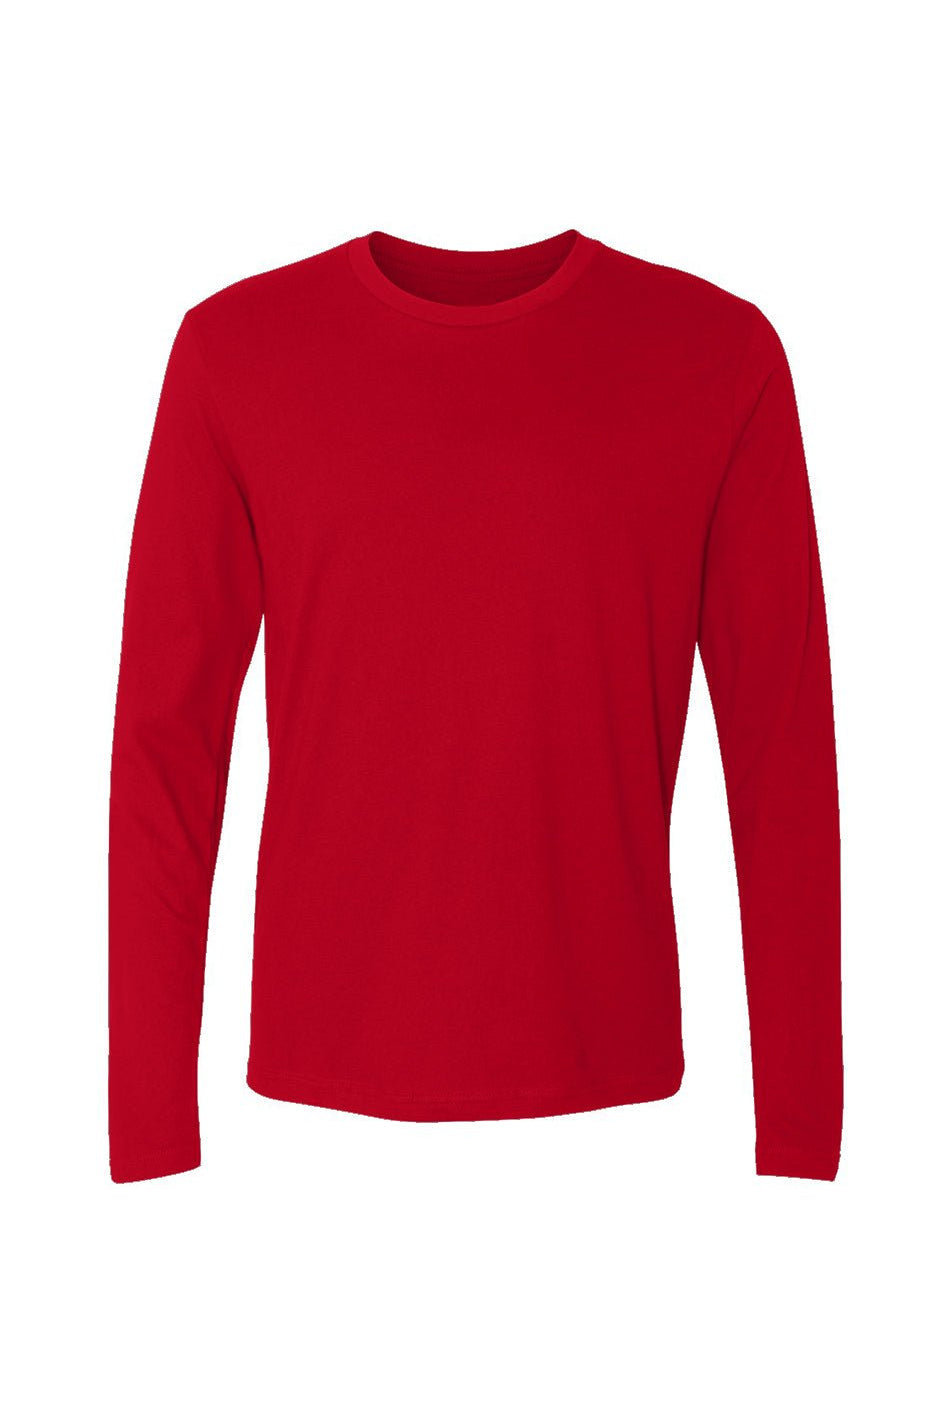 Men's Red Cotton Long-Sleeve Crew - Men's Long-Sleeve T-Shirts - Apliiq - Men's Red Cotton Long-Sleeve Crew - APQ-4584897S5A0 - xs - red - Cotton Long-Sleeve Crew - Dragon Foxx™ - Dragon Foxx™ Men's Cotton Long-Sleeve T-Shirt